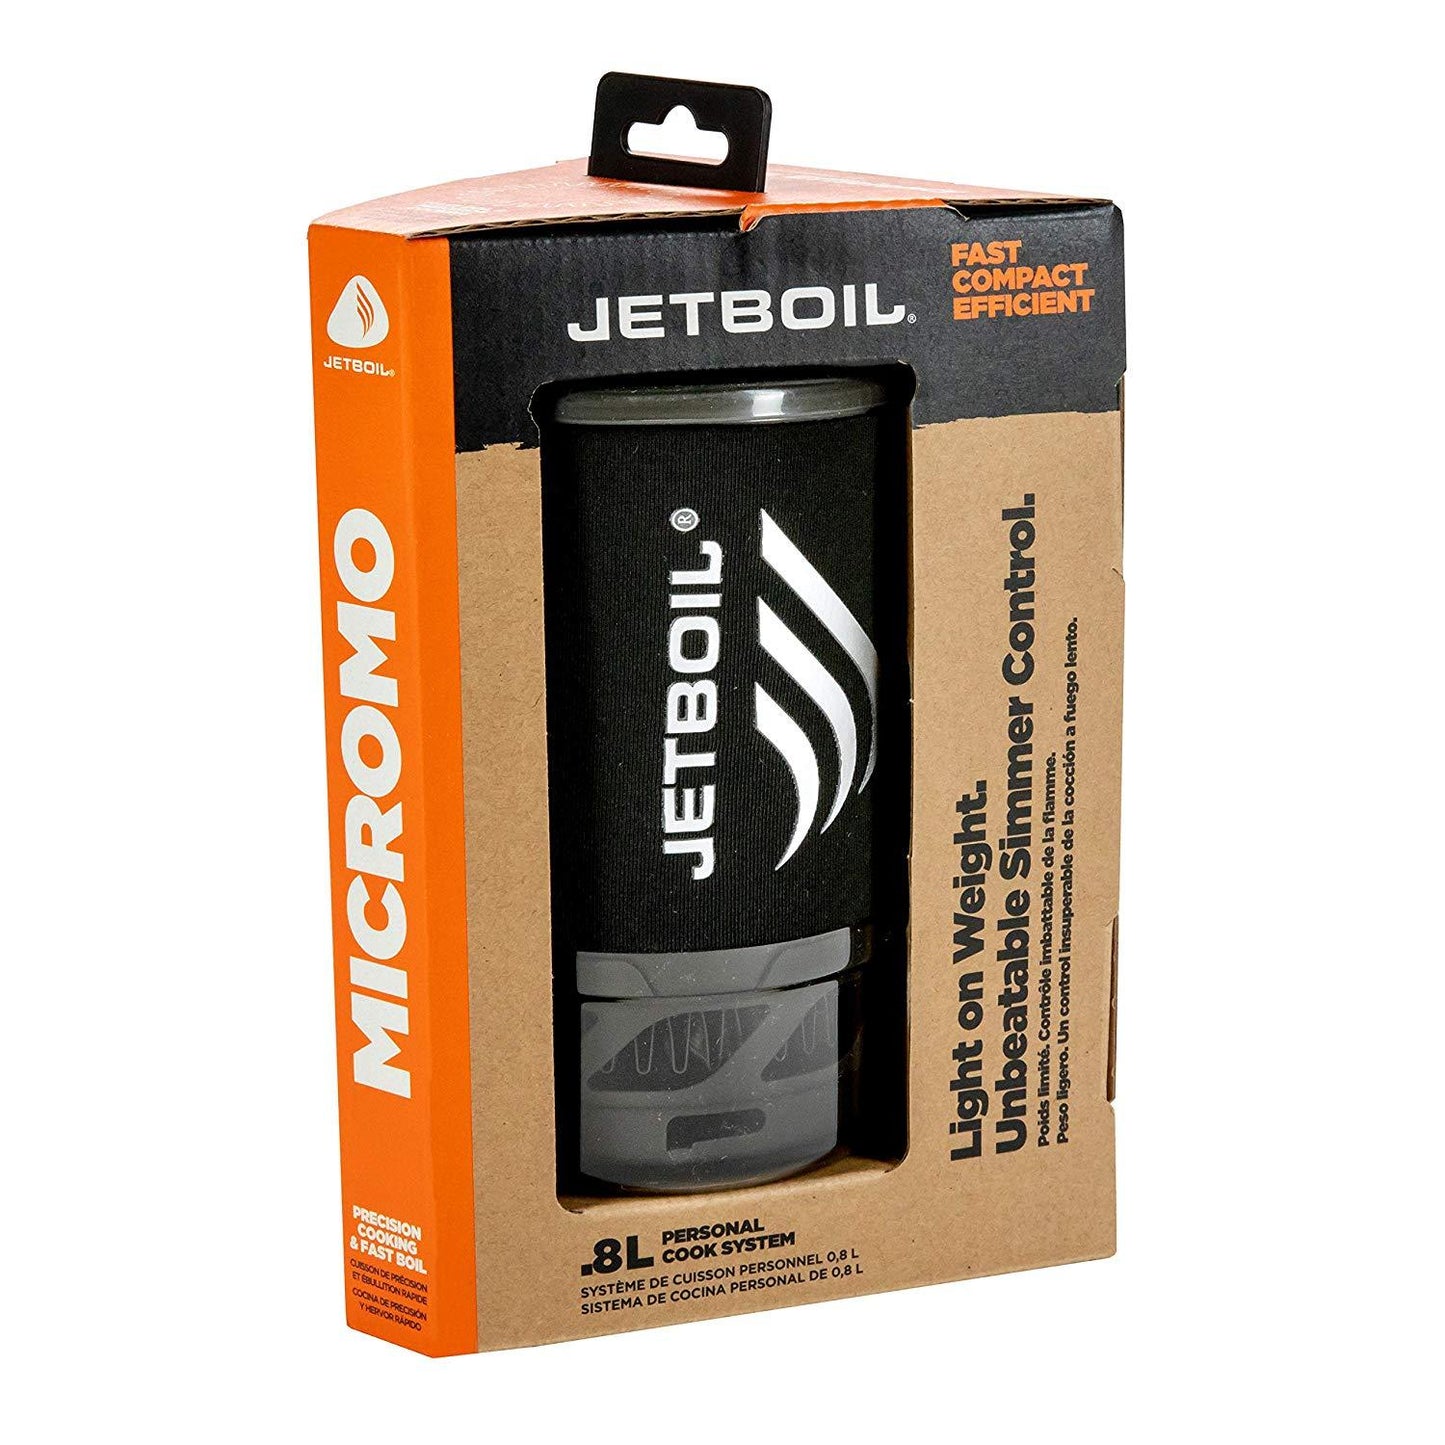 Jetboil Micromo eldavél 0.8L Veidifelagid.is 